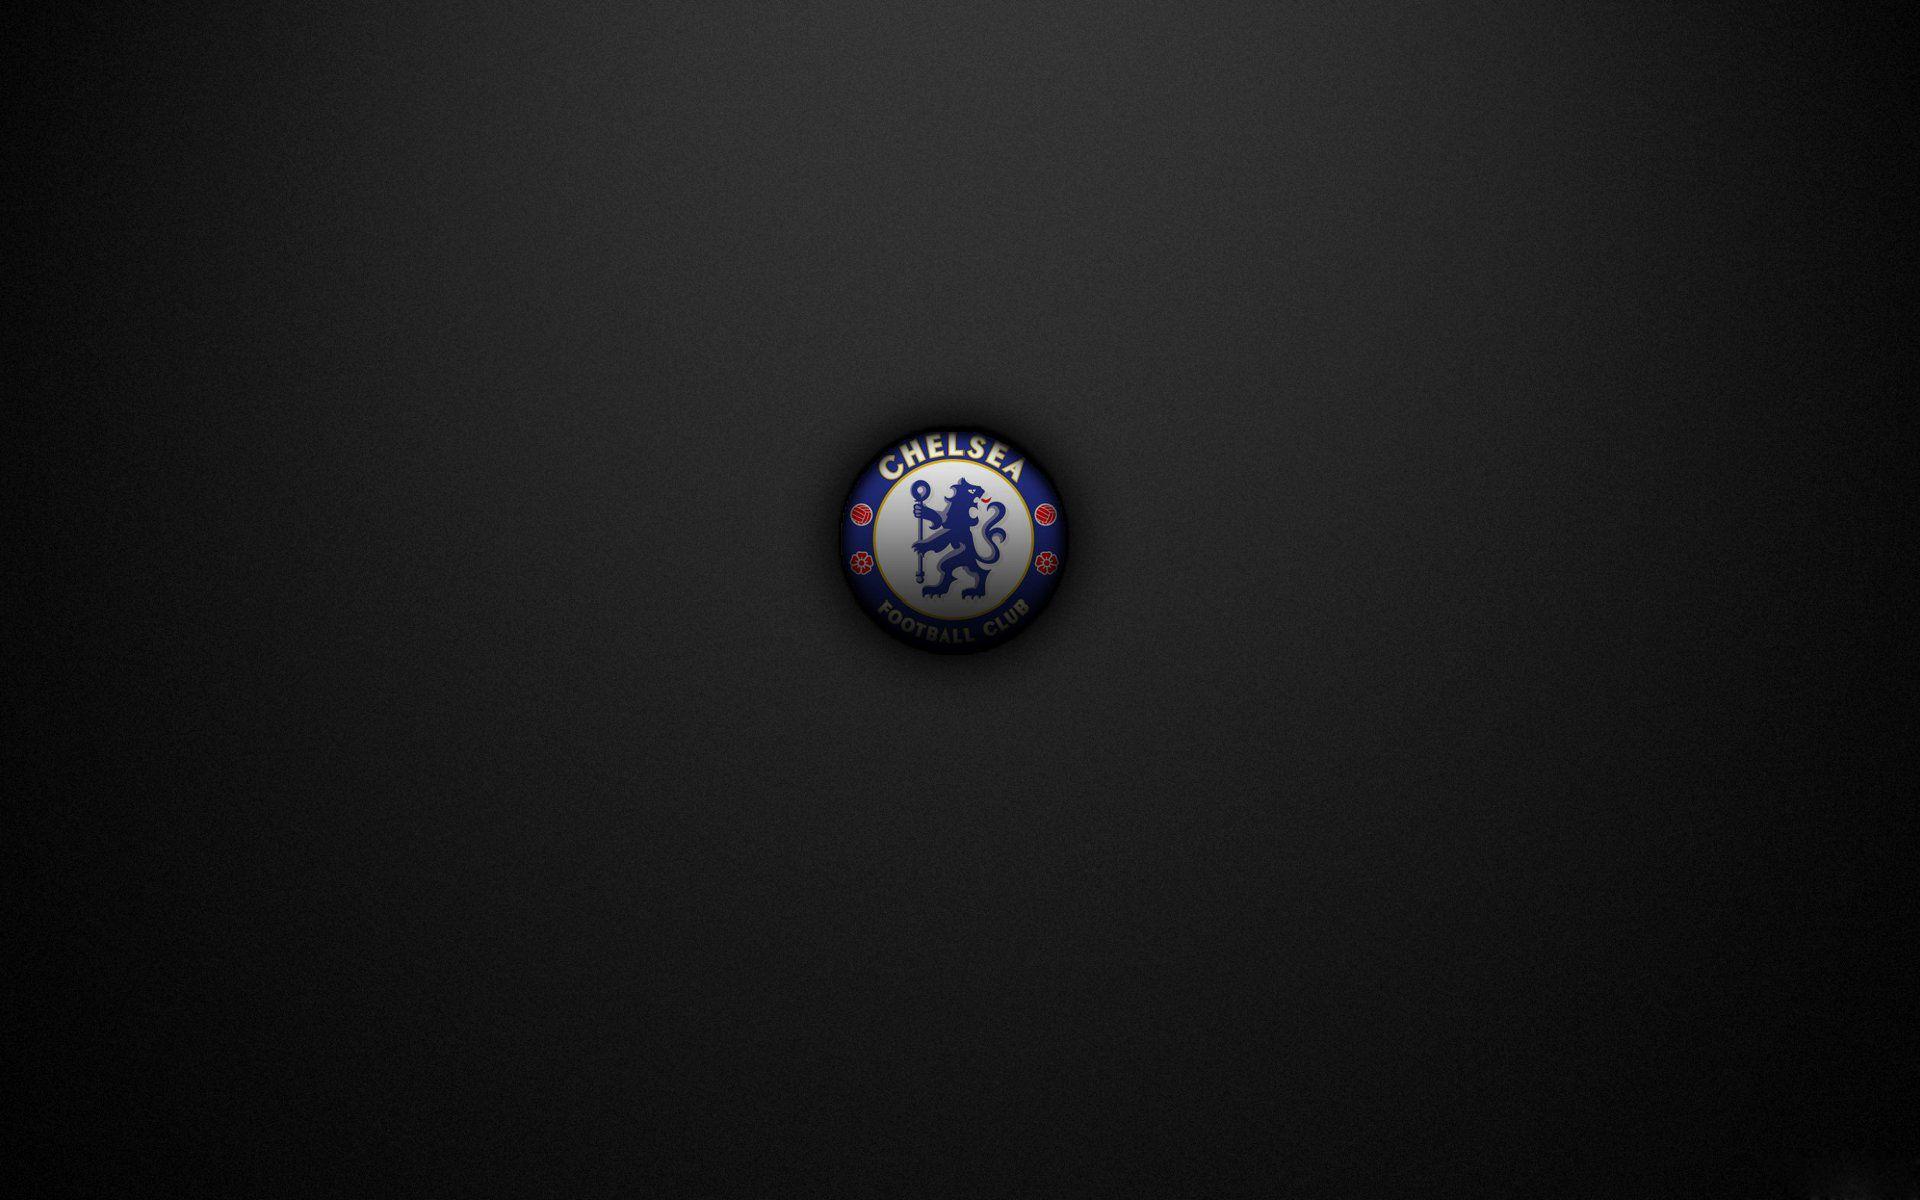 Wallpaper.wiki Allimg Chelsea Logo Image Download PIC WPE008267